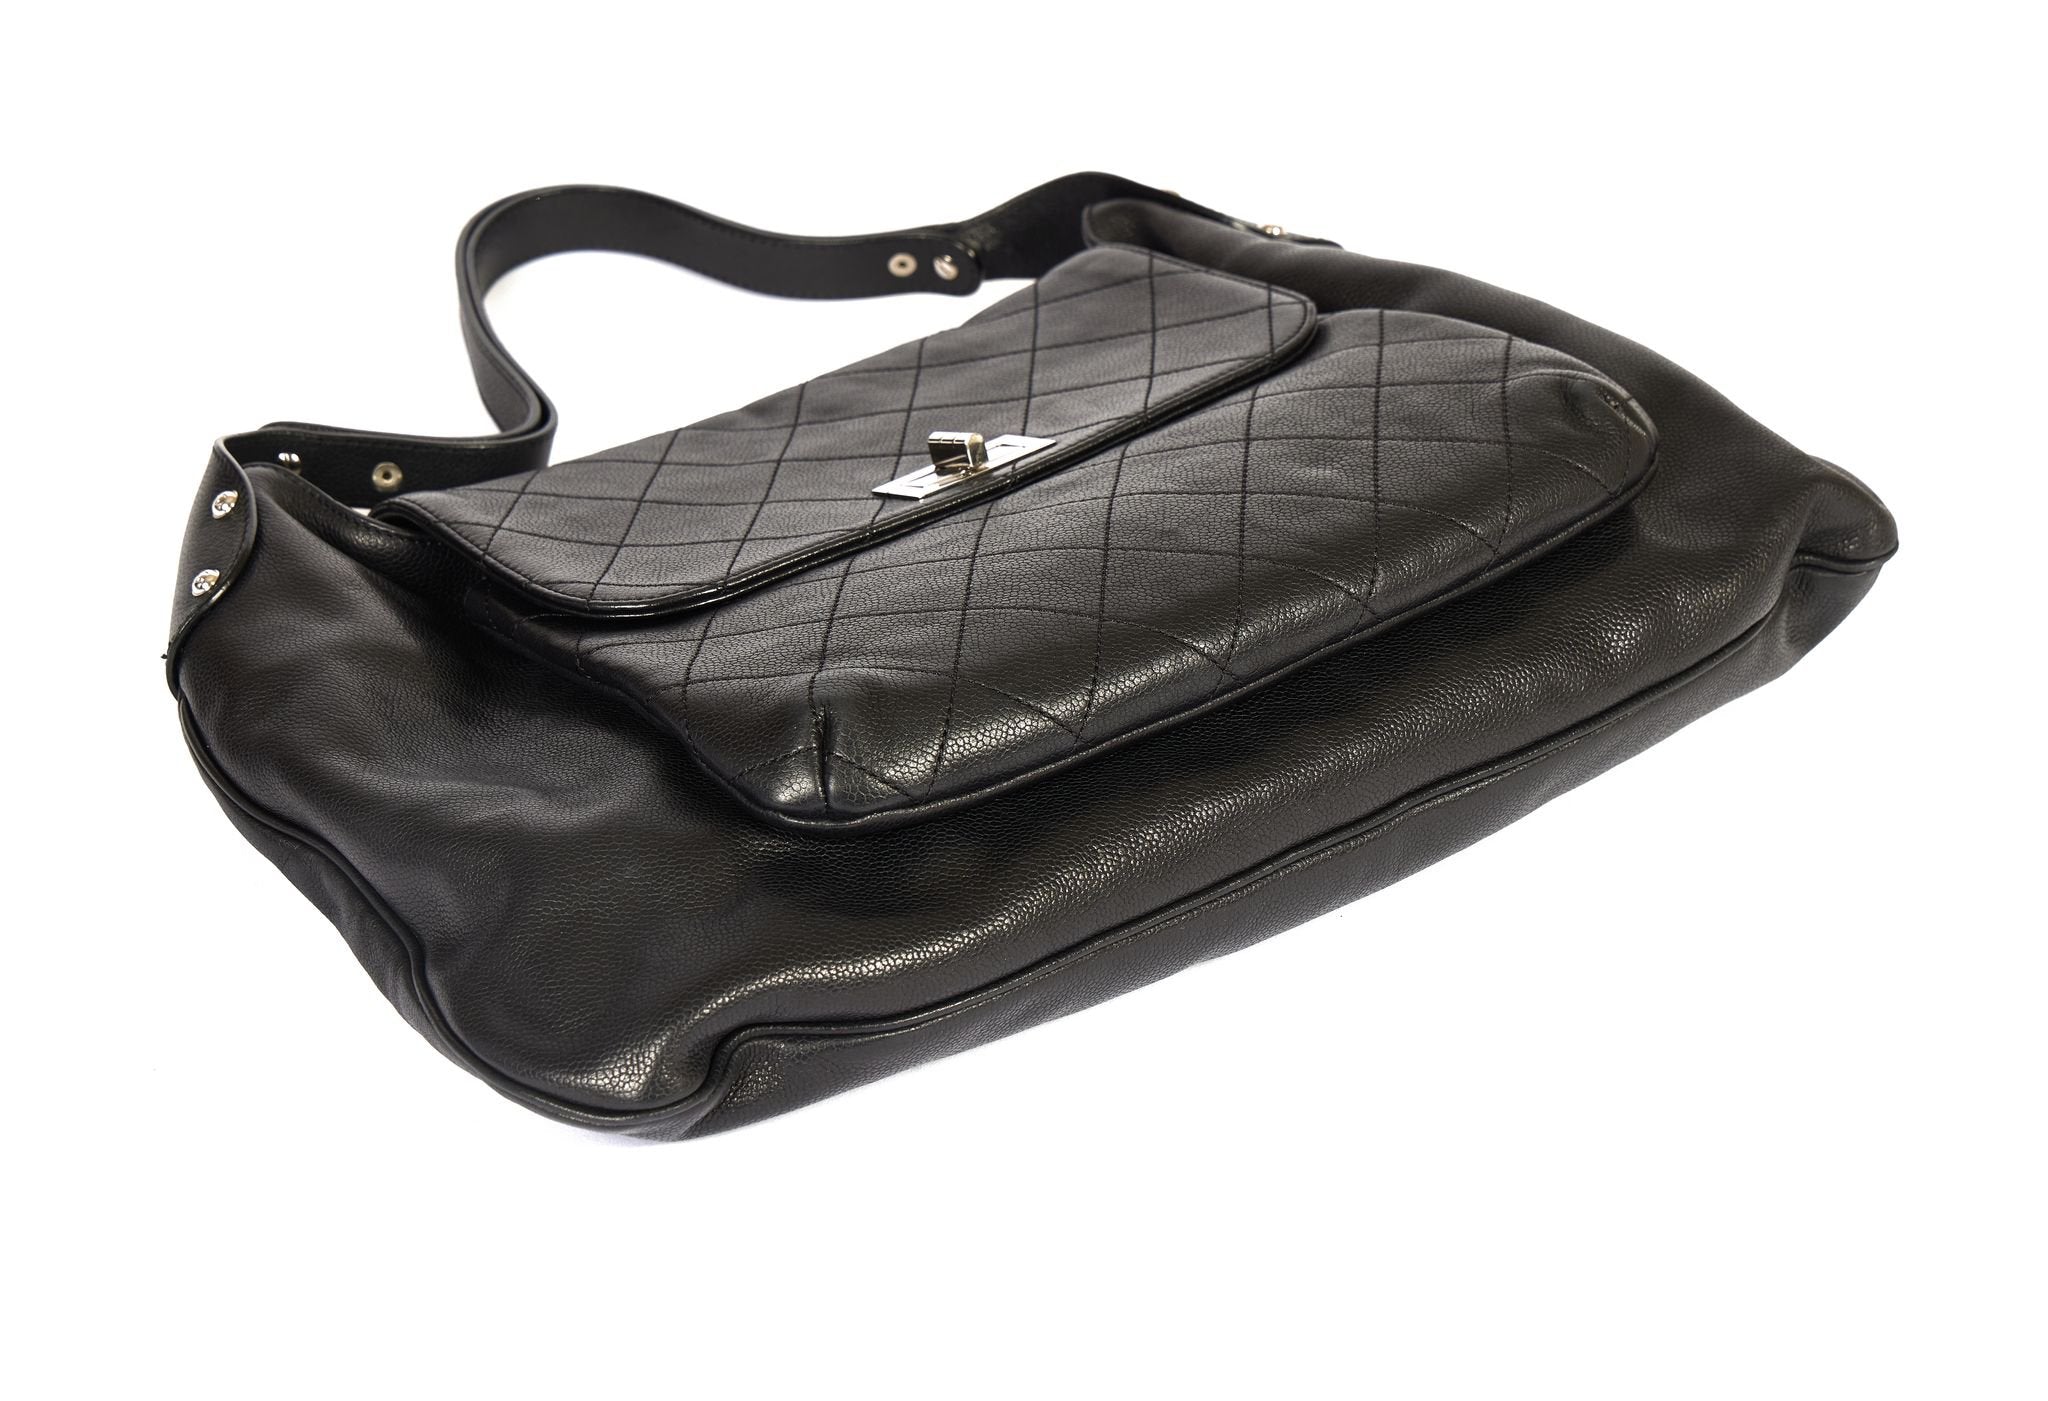 chanel black sling bag crossbody